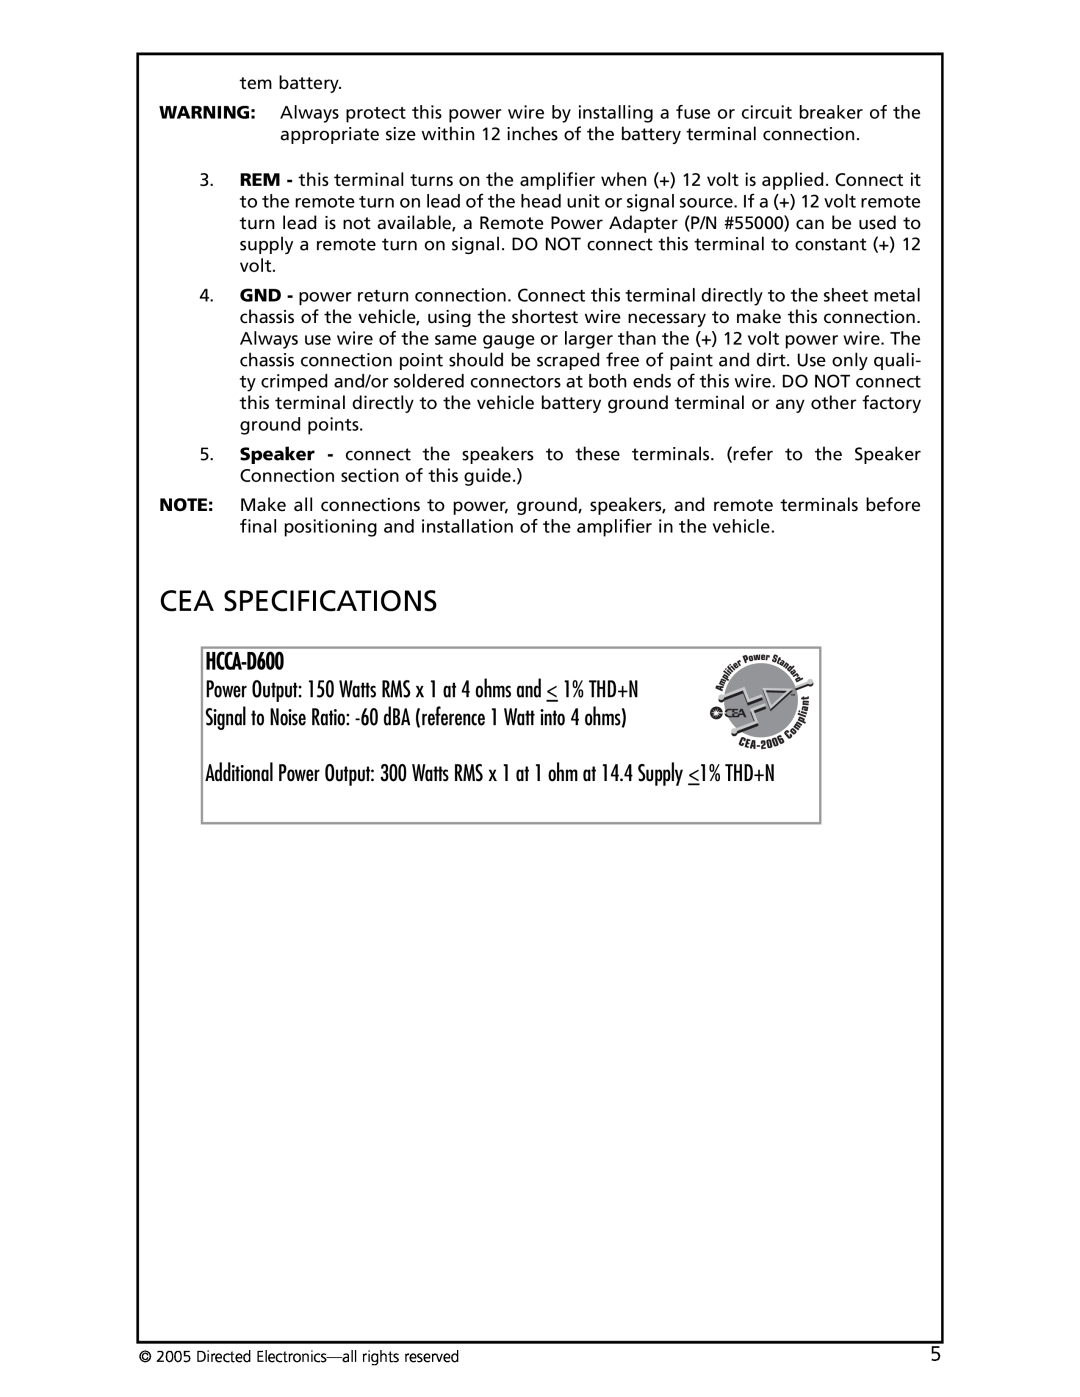 Orion Car Audio HCCA-D600 manual Cea Specifications 